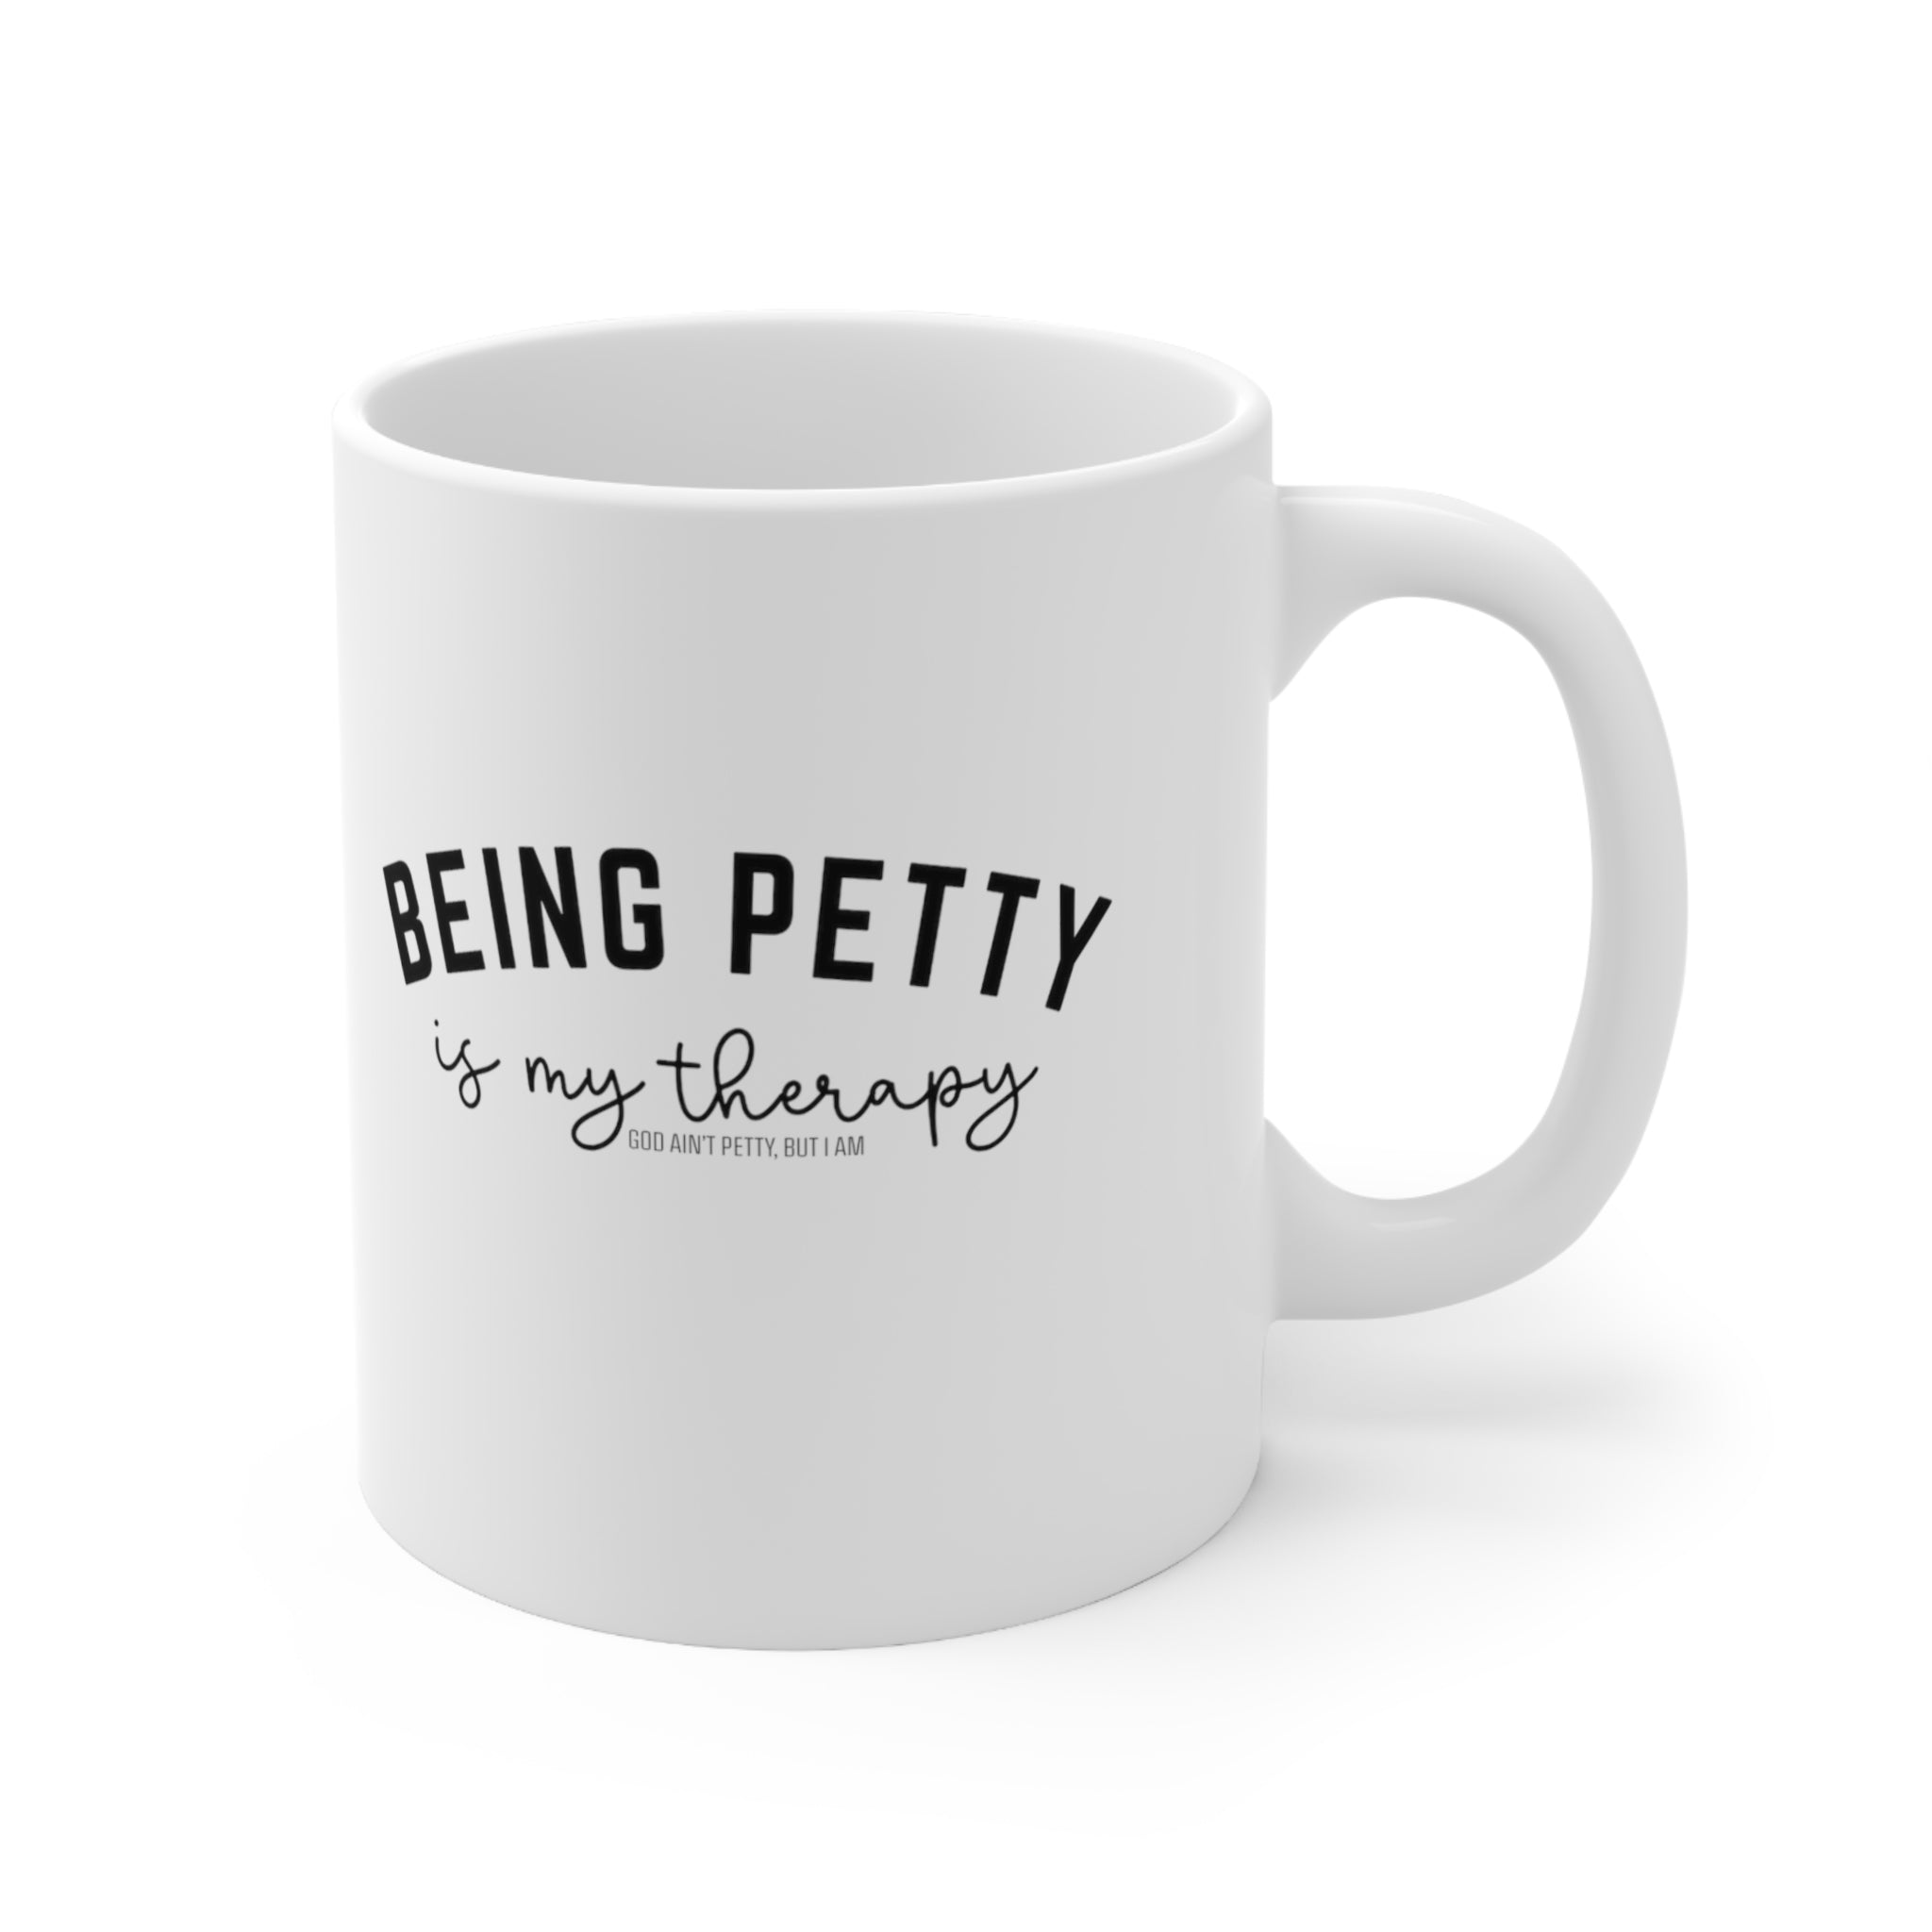 Being Petty is my Therapy Mug 11oz (White & Black )-Mug-The Original God Ain't Petty But I Am